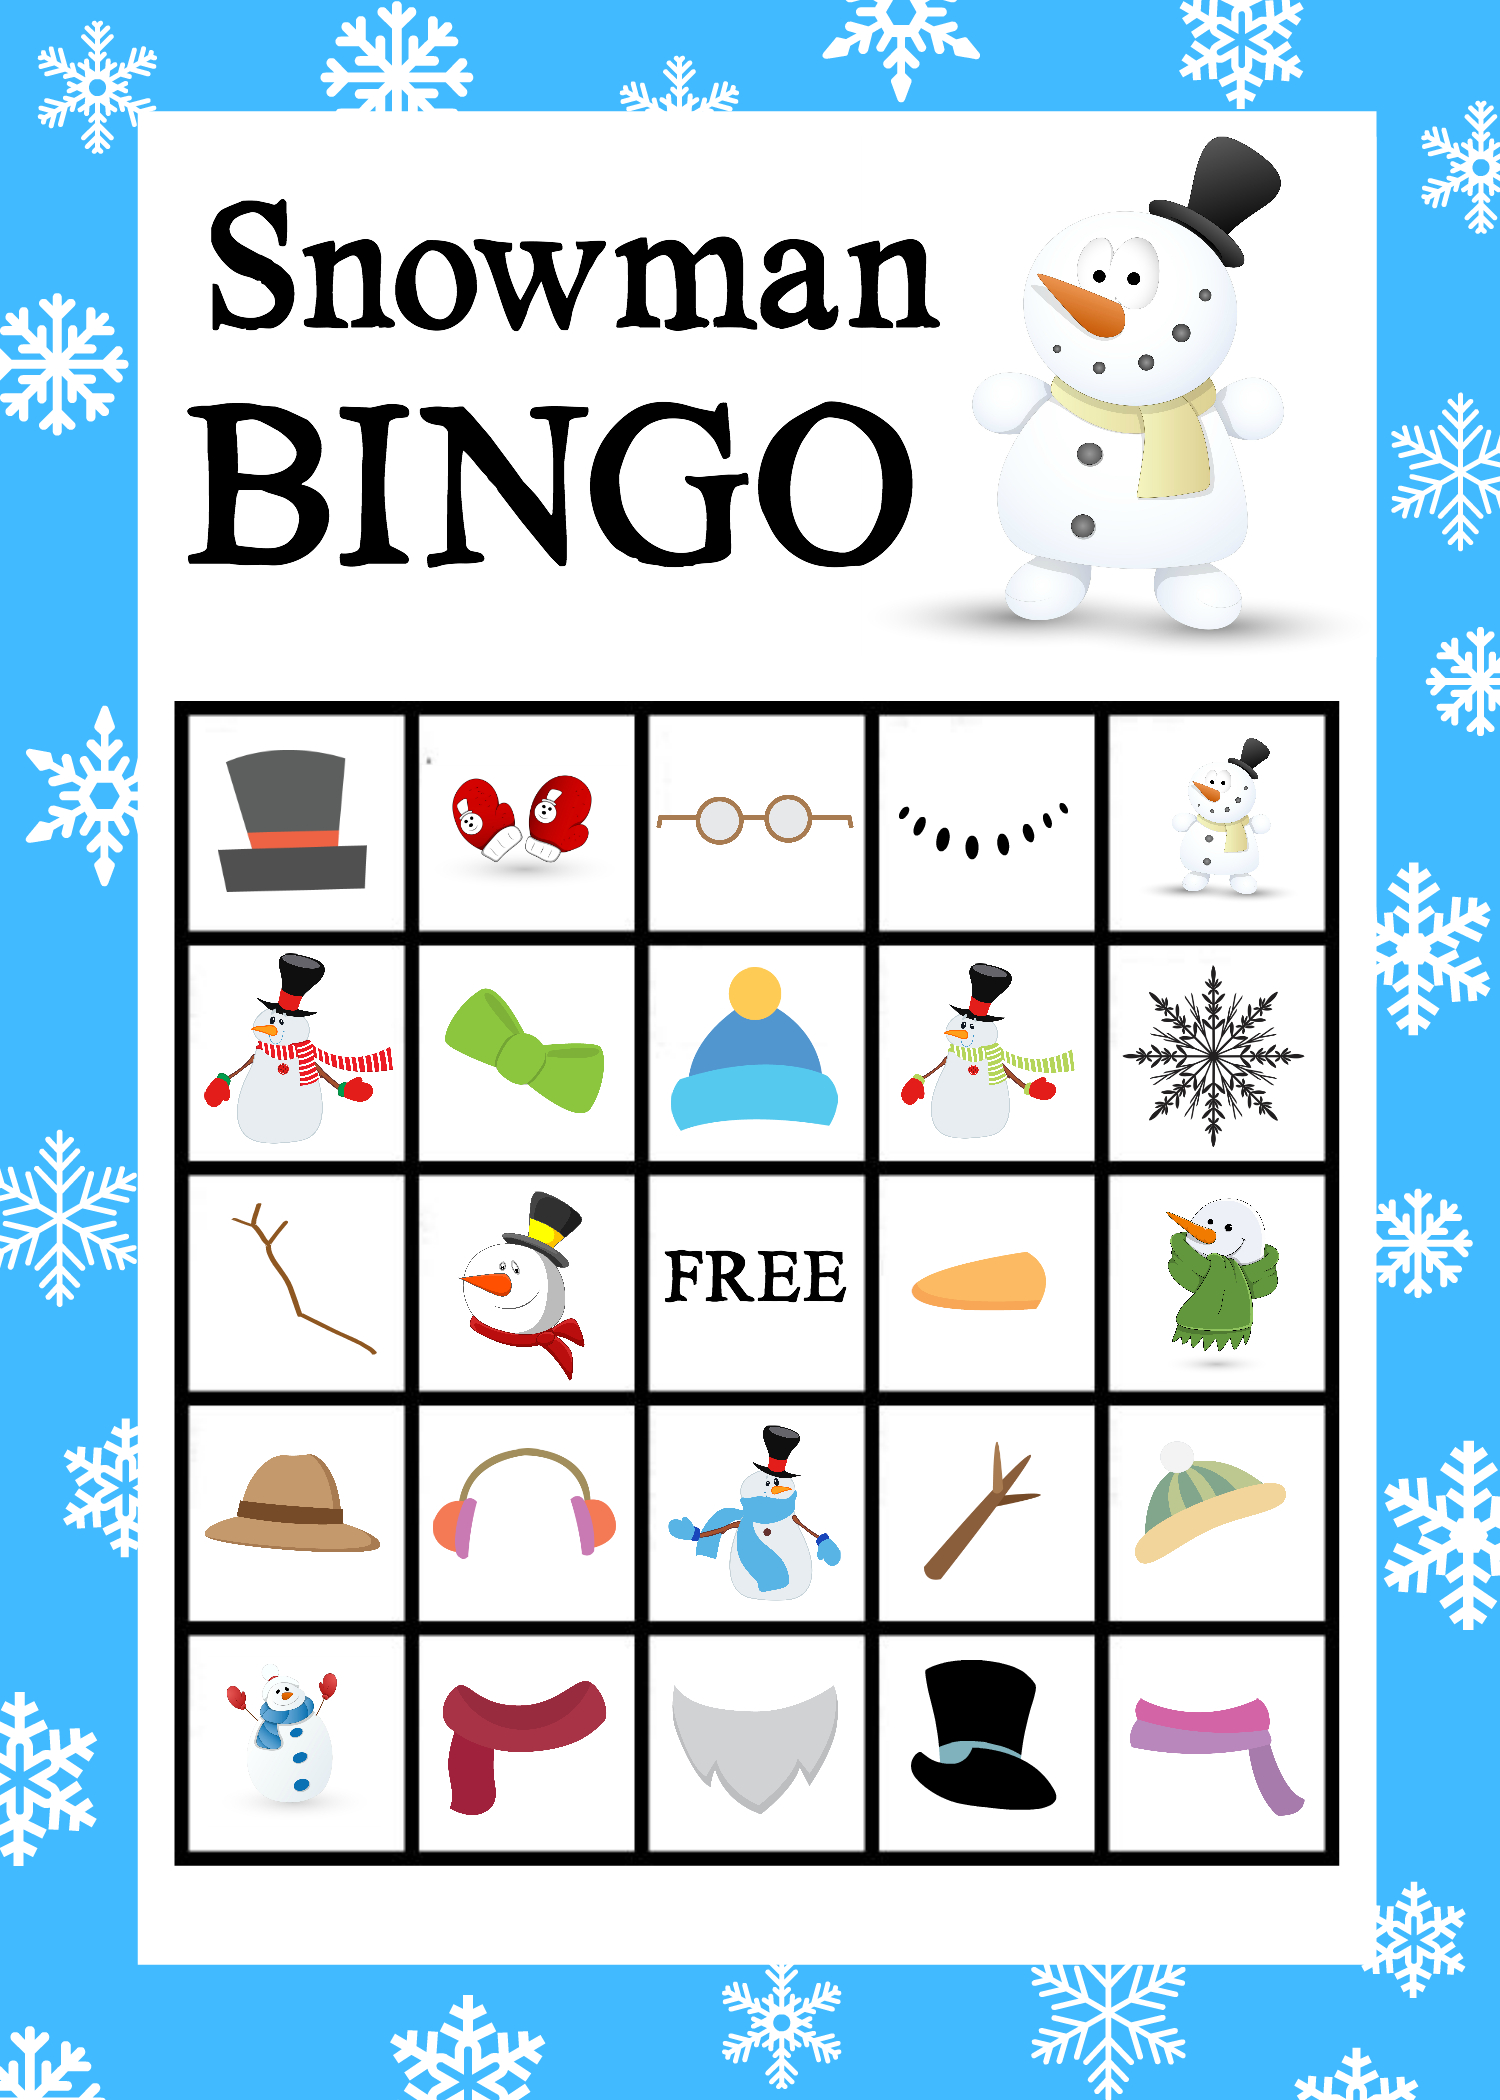 Winter Activities Bingo Game Printable A Mom s Take Winter Bingo 